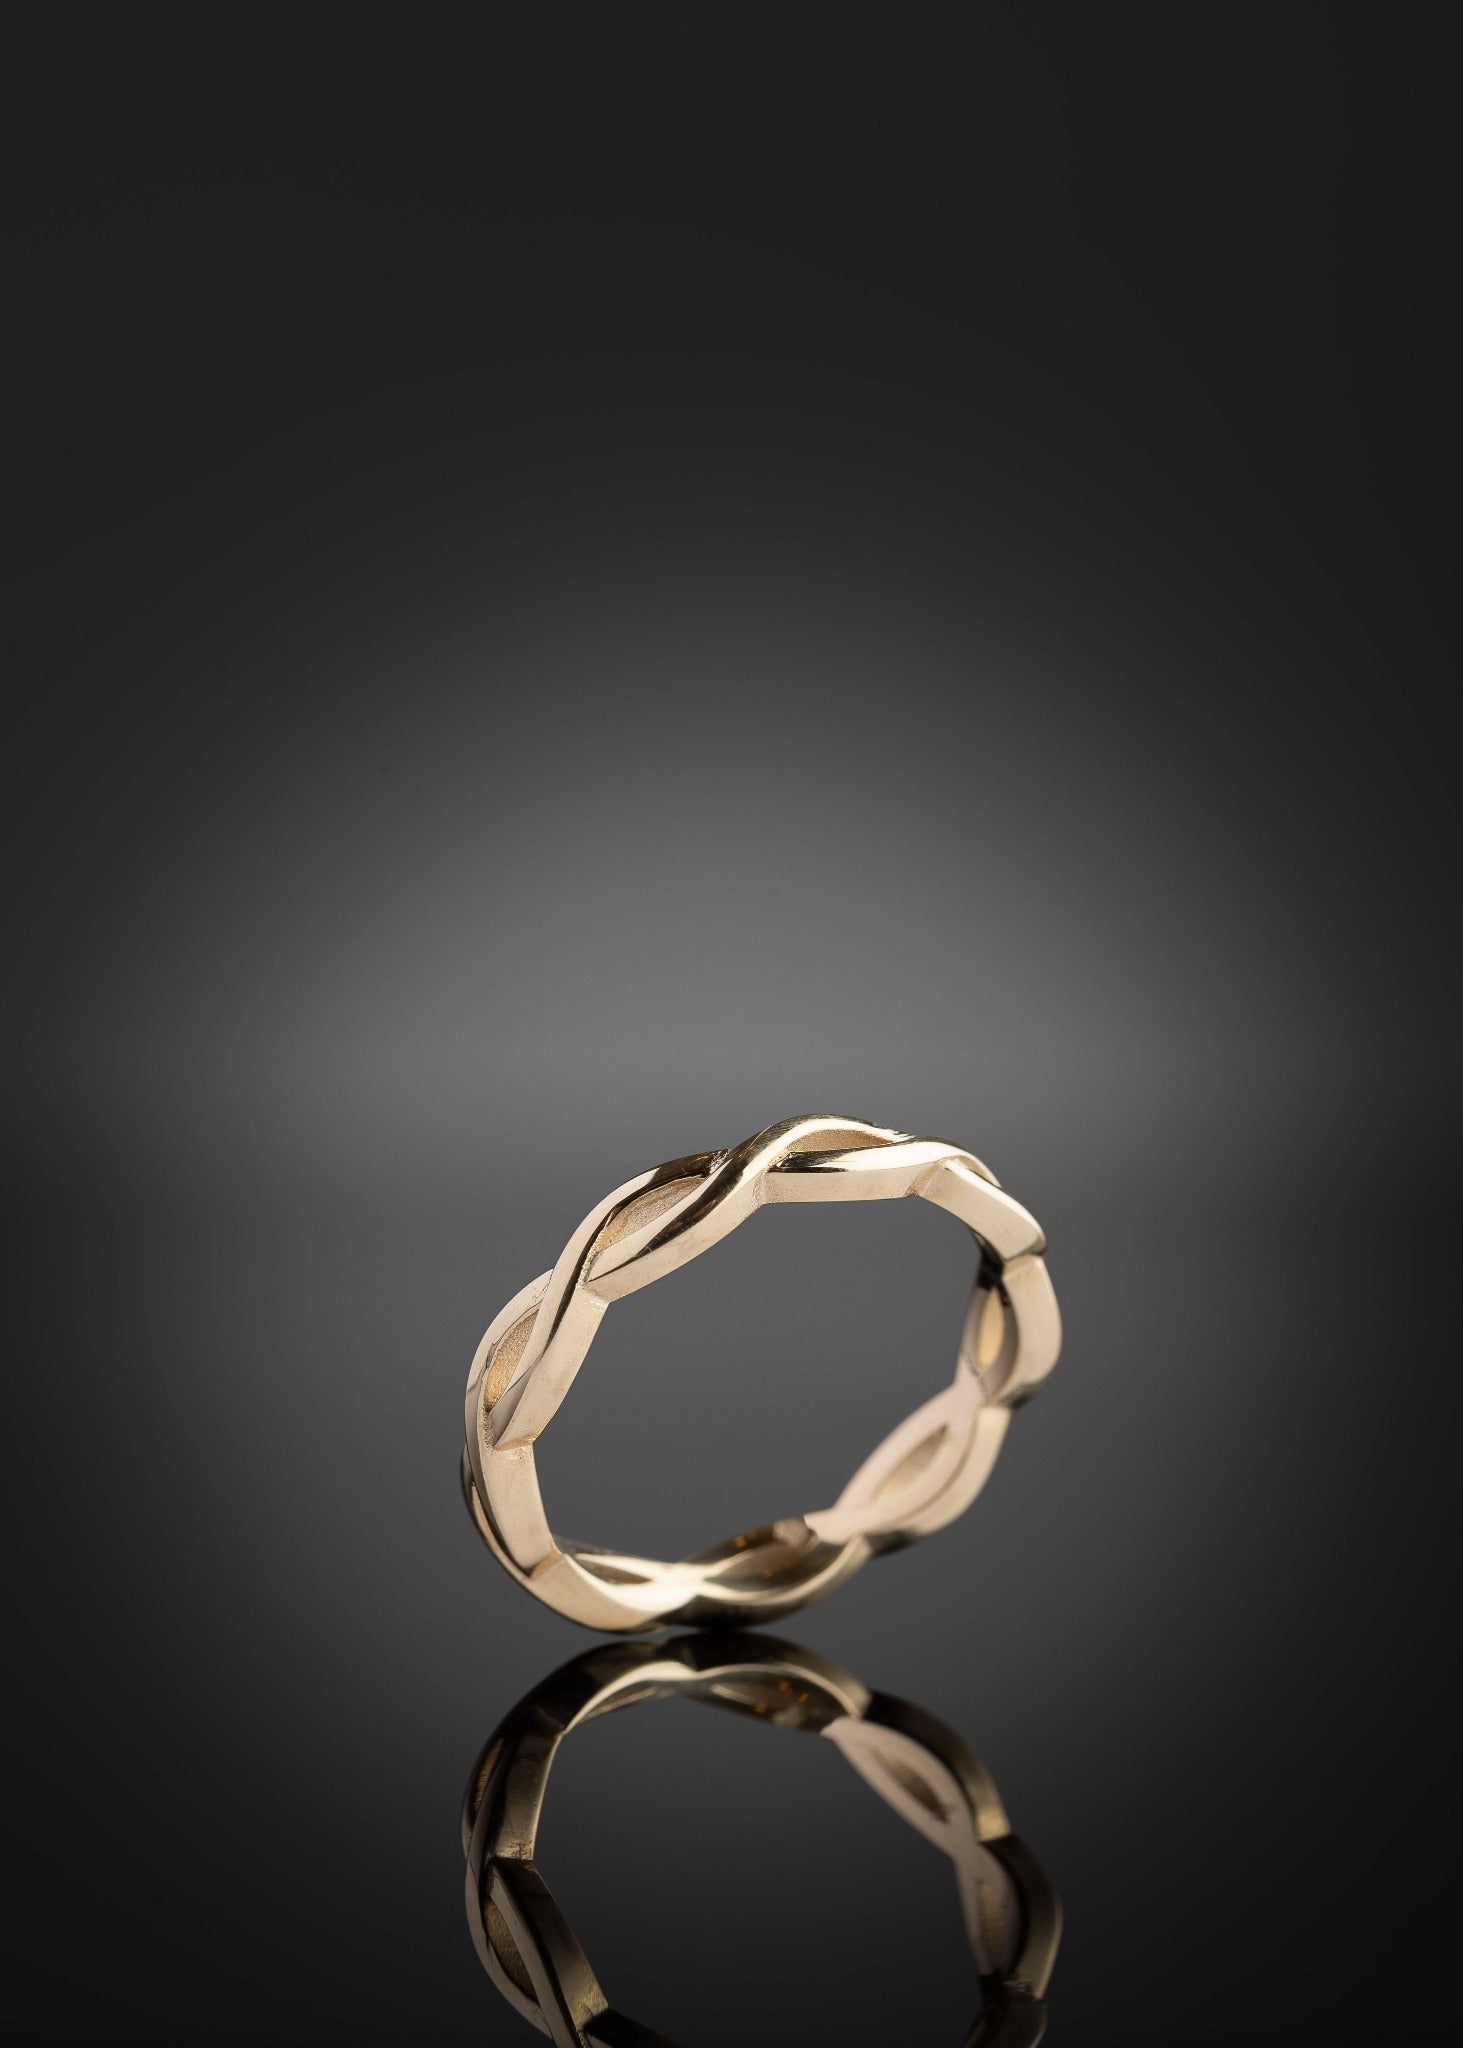 14K Yellow Gold 2 Stone Diamond Ladies Ring 0.4ct Love and Friendship  Design 802917